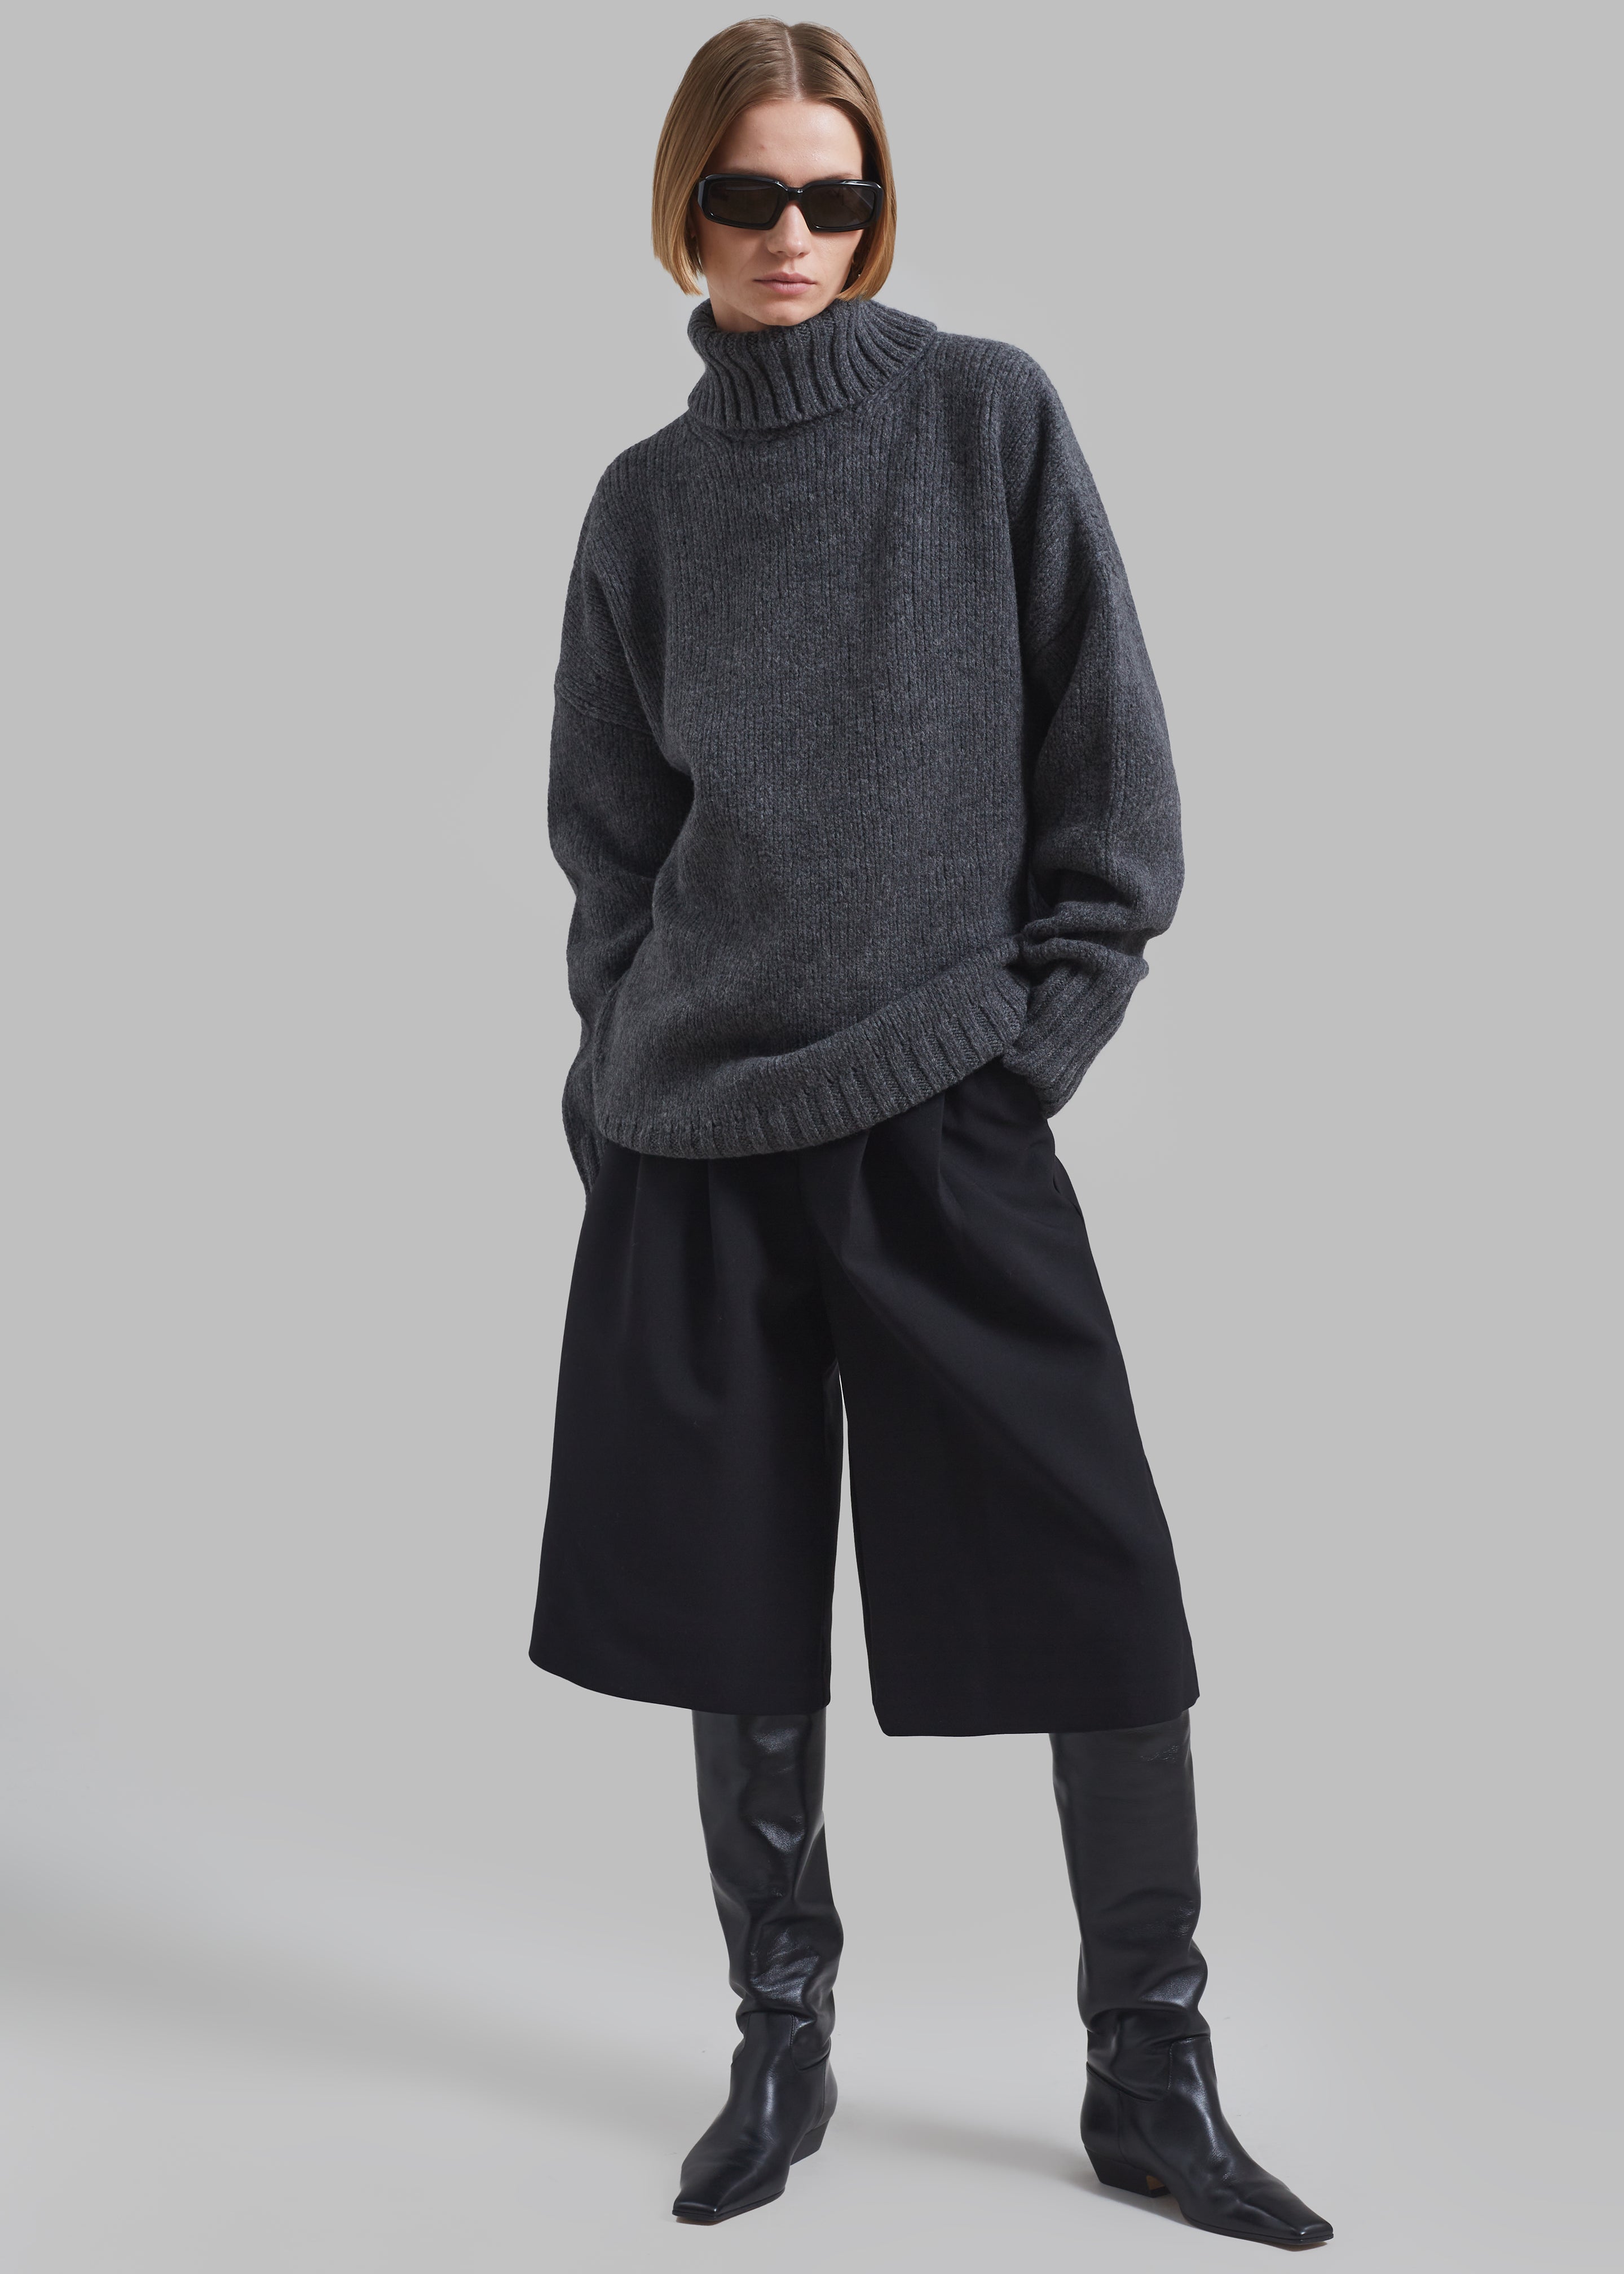 Sportmax Premier Knitted Sweater Dress - Dark Grey - 2